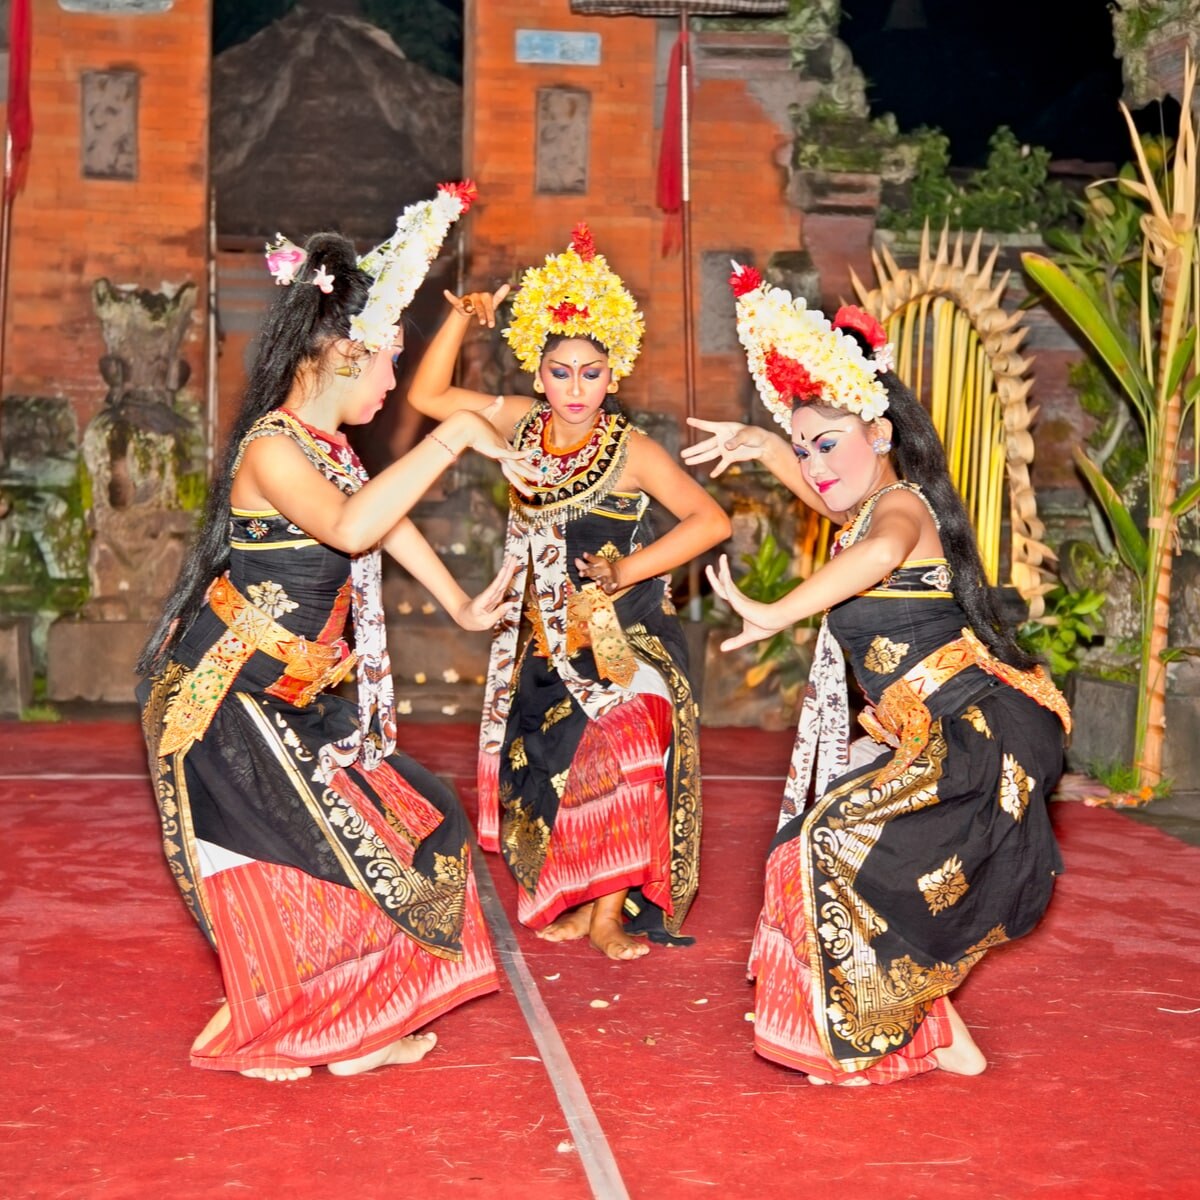 Bali's Janger Dance: A Joyful Delight for All Ages